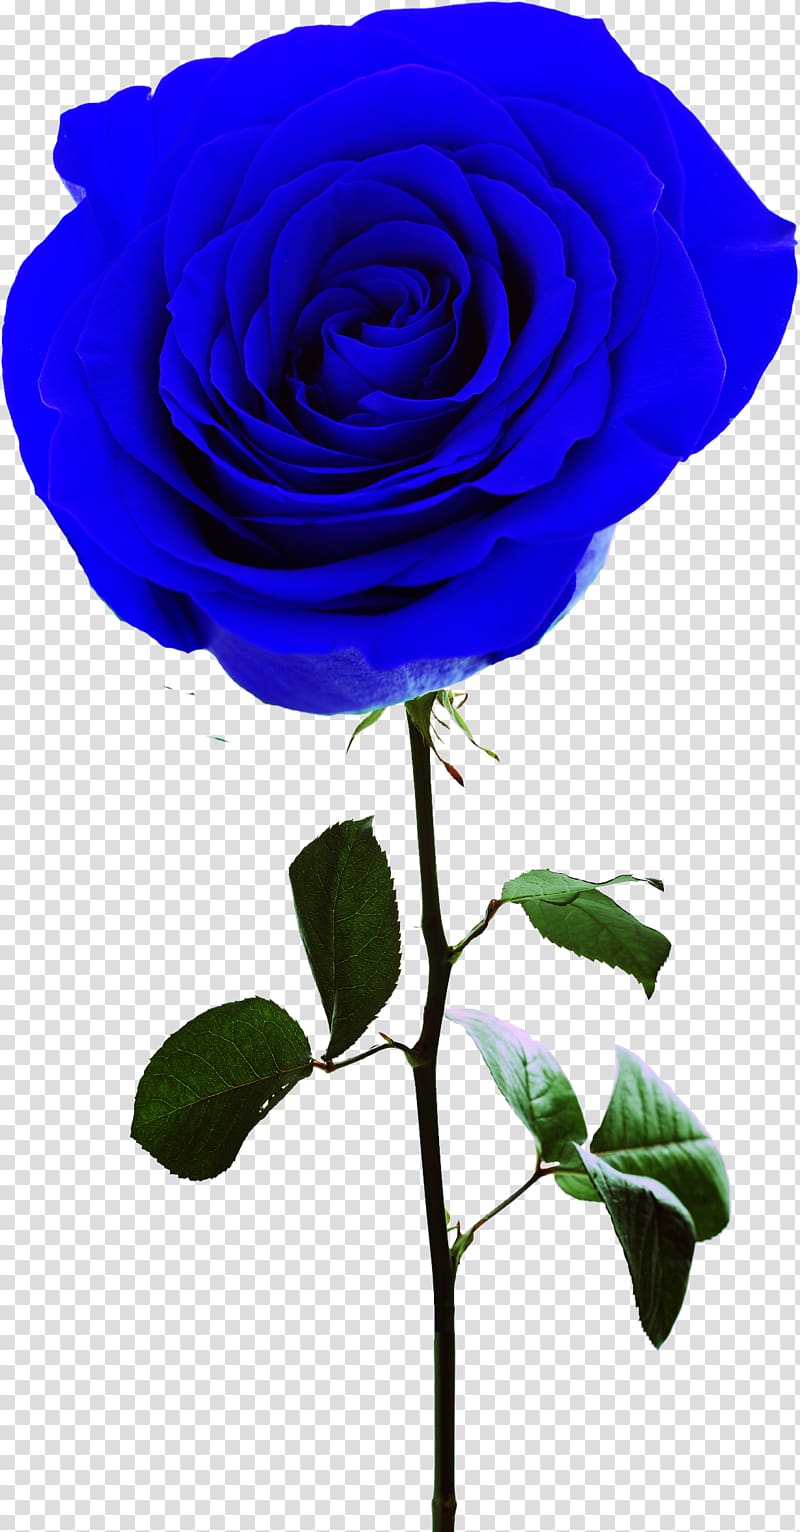 Rosa gallica Centifolia roses Garden roses Flower, blue rose transparent background PNG clipart